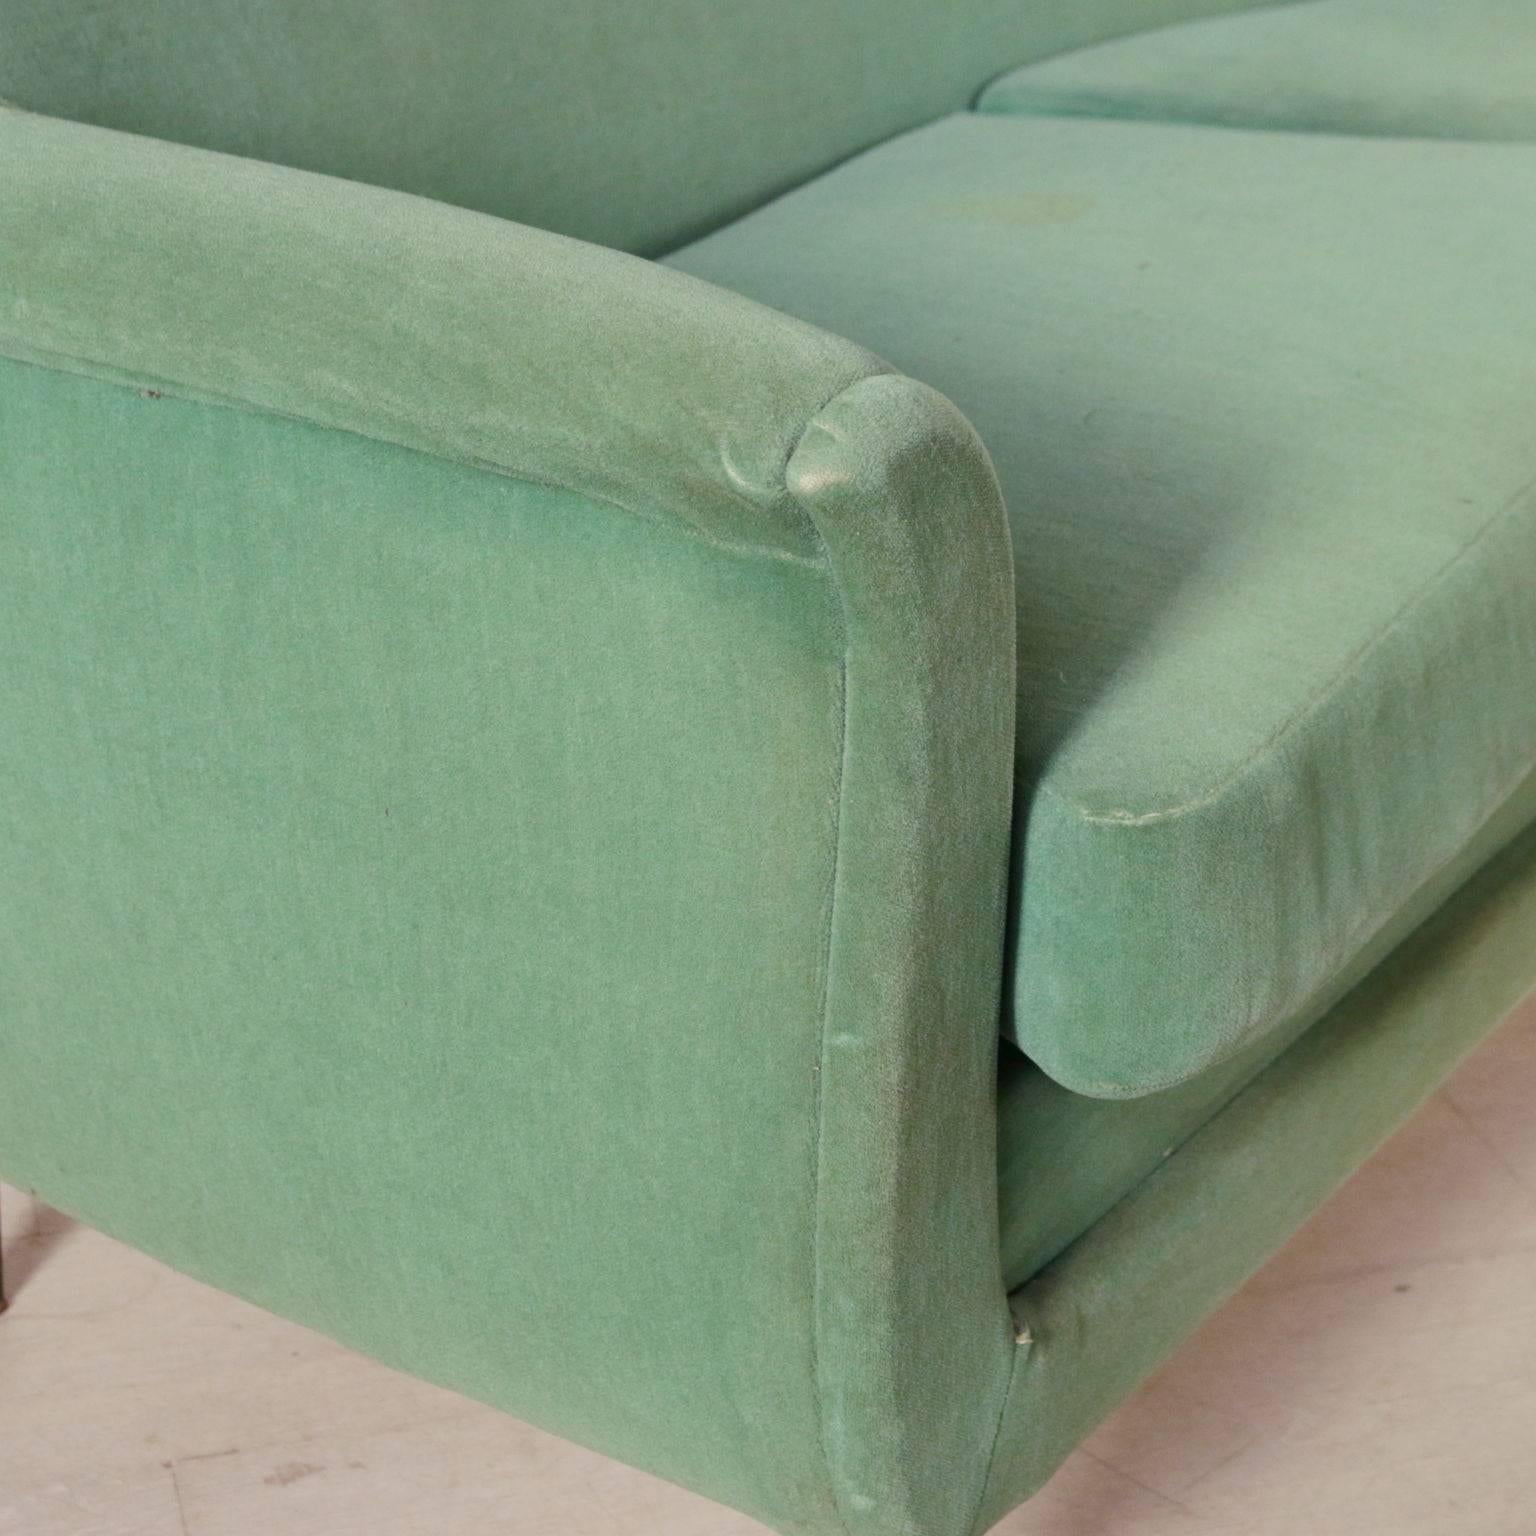 Sofa vintage, spring padding, velvet upholstery. Manufactured in Italy, 1950s-1960s.